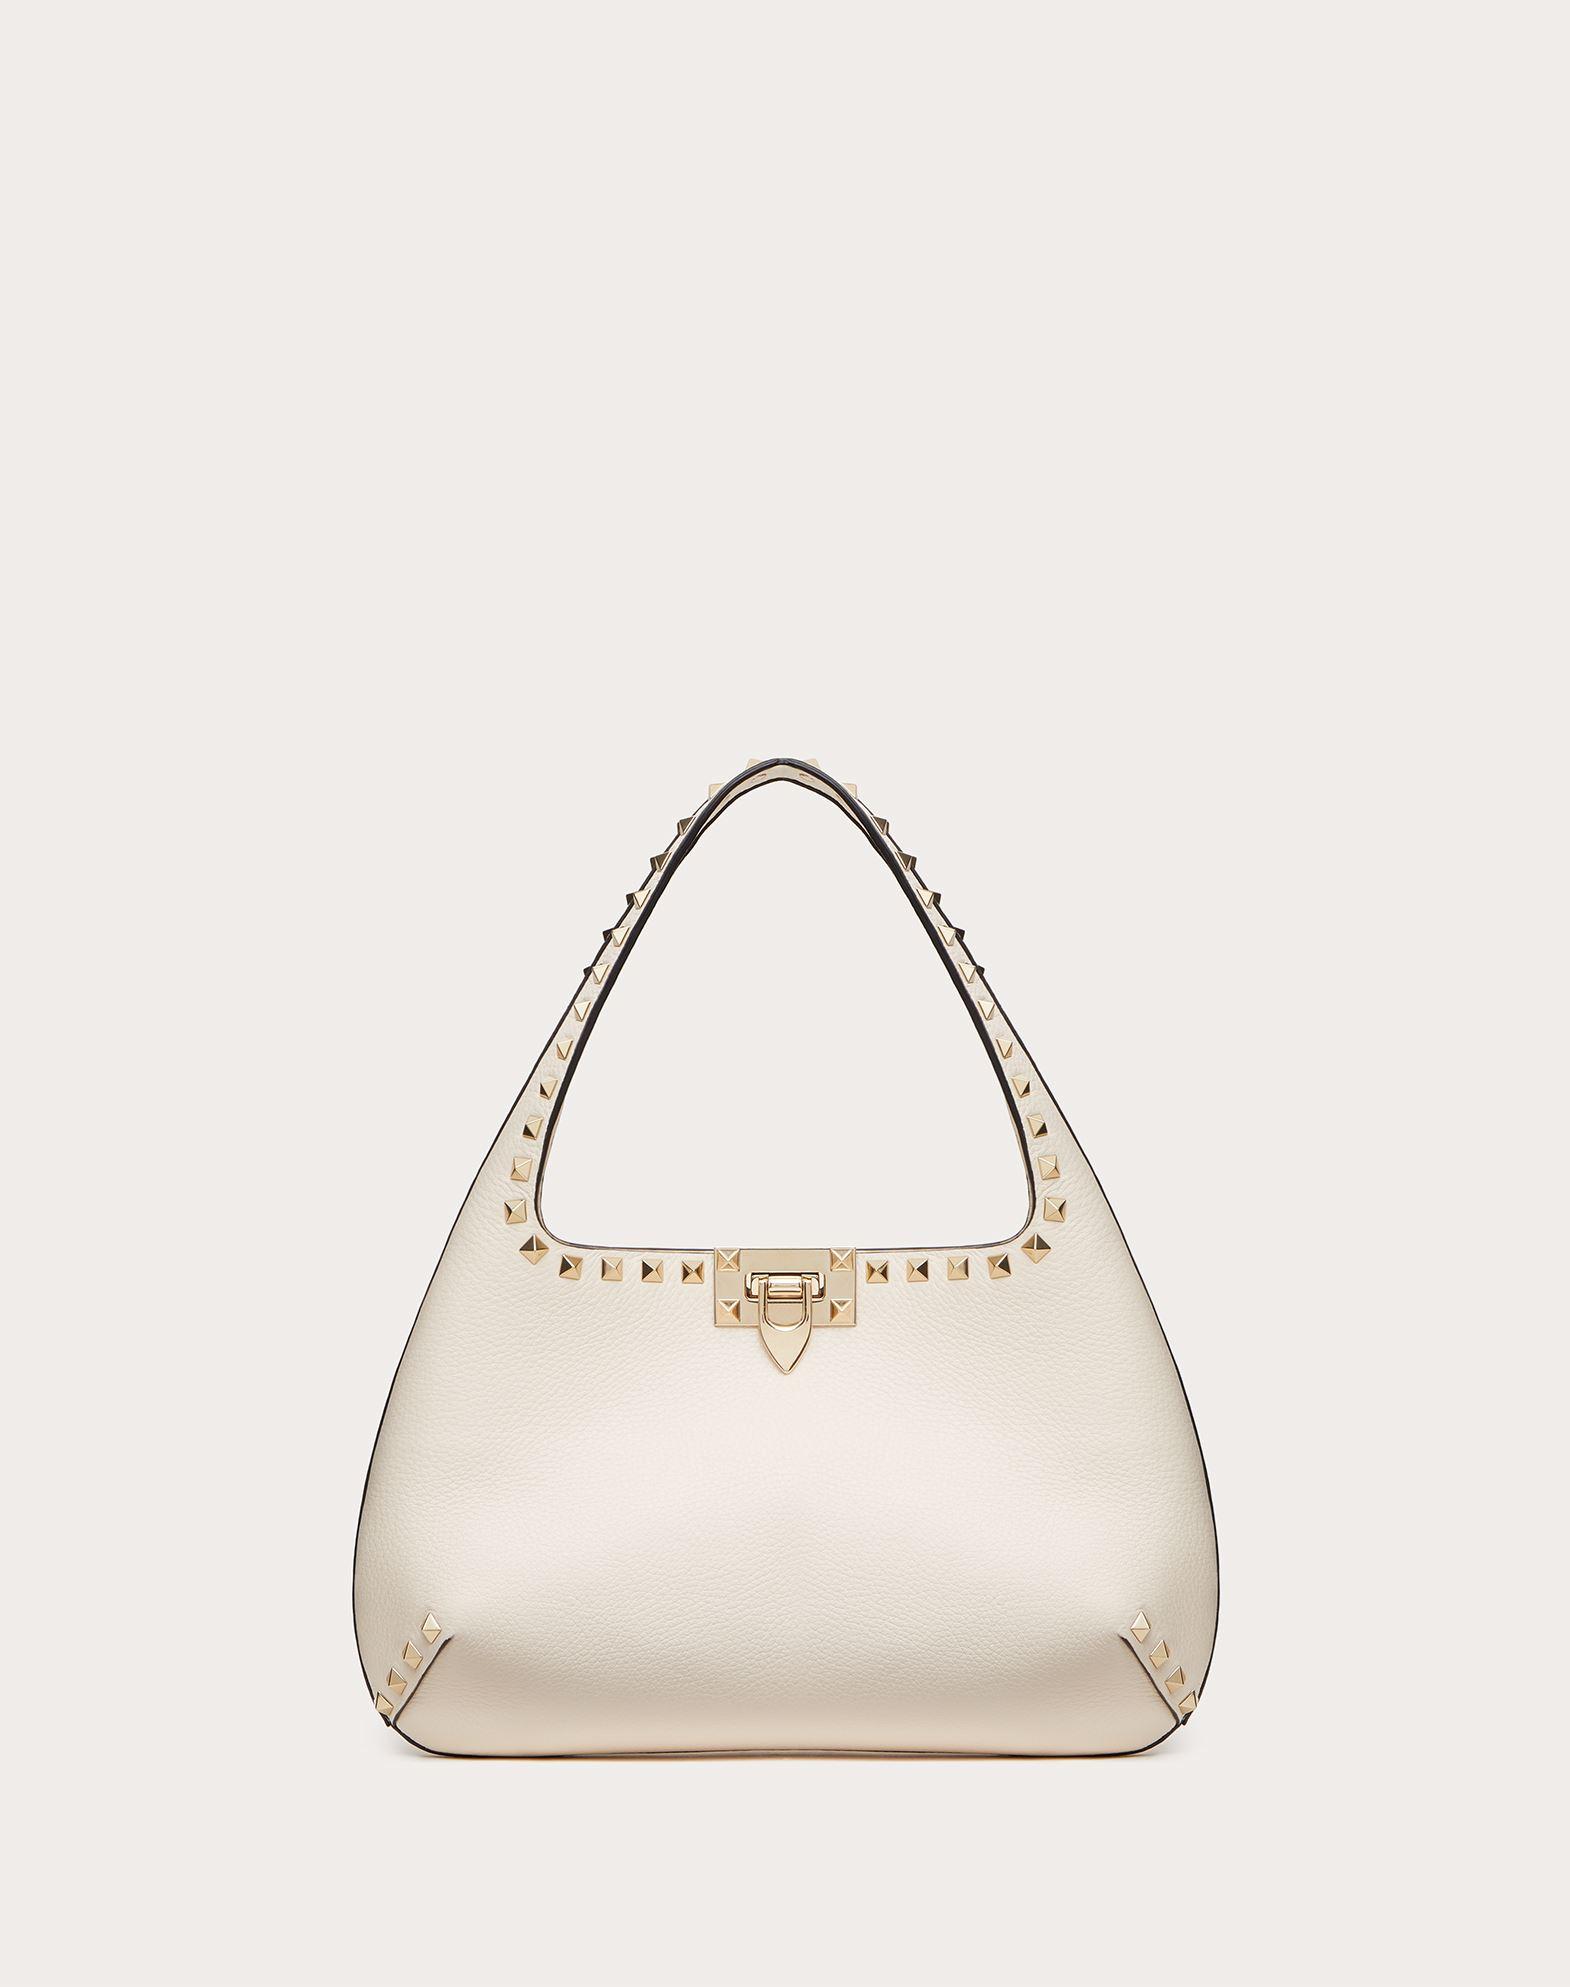 Valentino 100% Leather Handbags